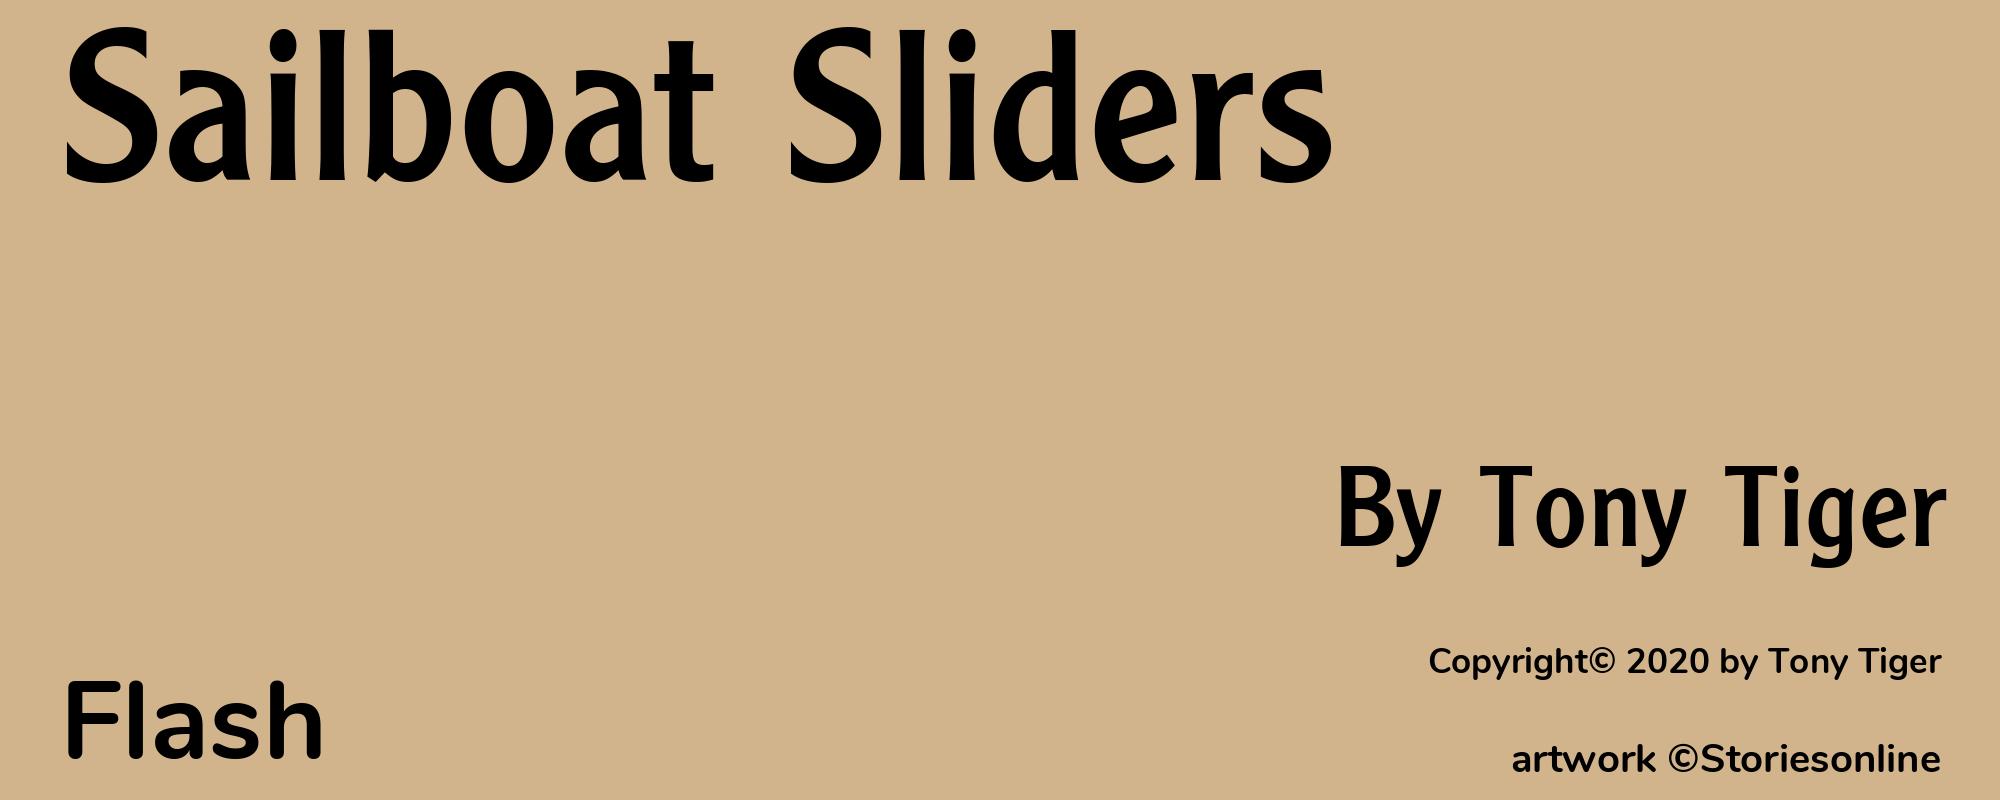 Sailboat Sliders - Cover